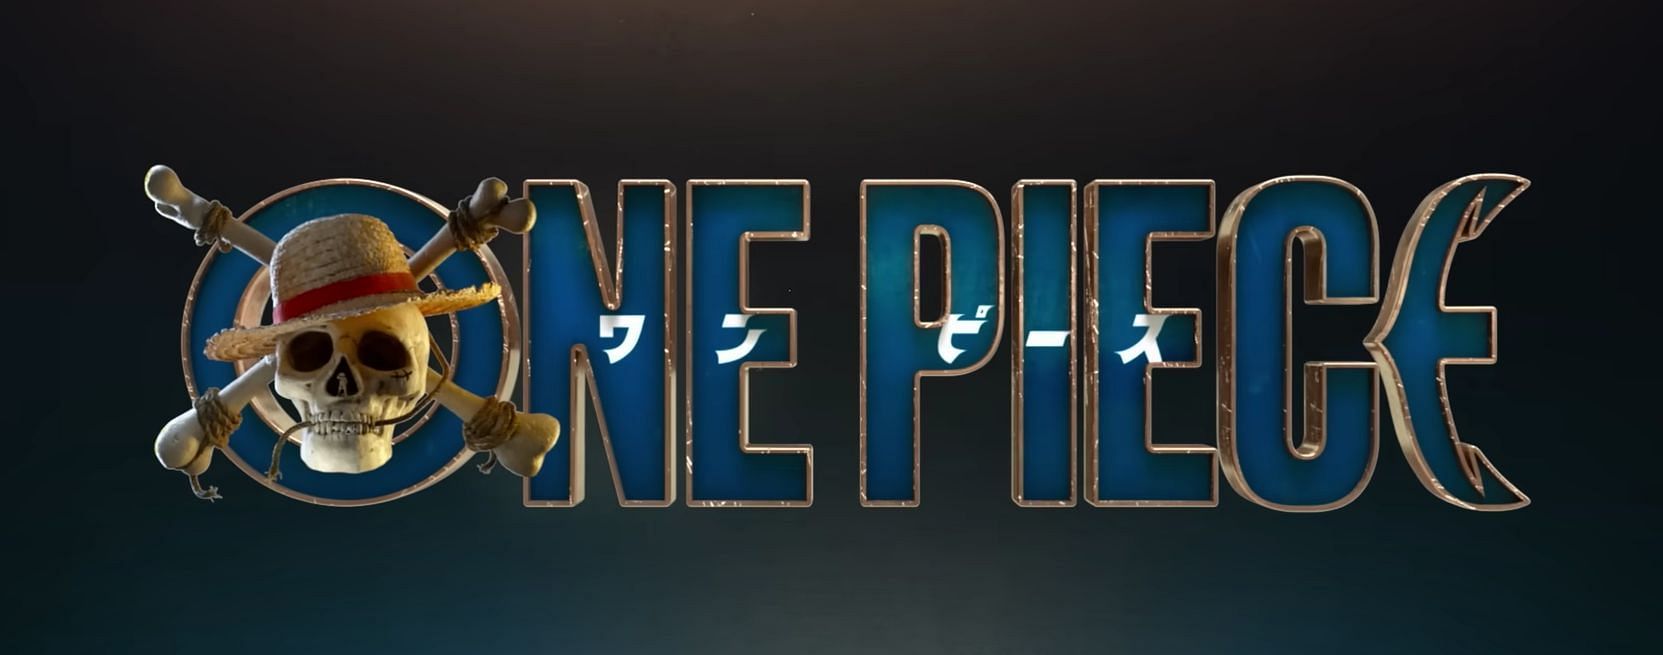 One Piece live action cover (Image Via Tomorrow studios)